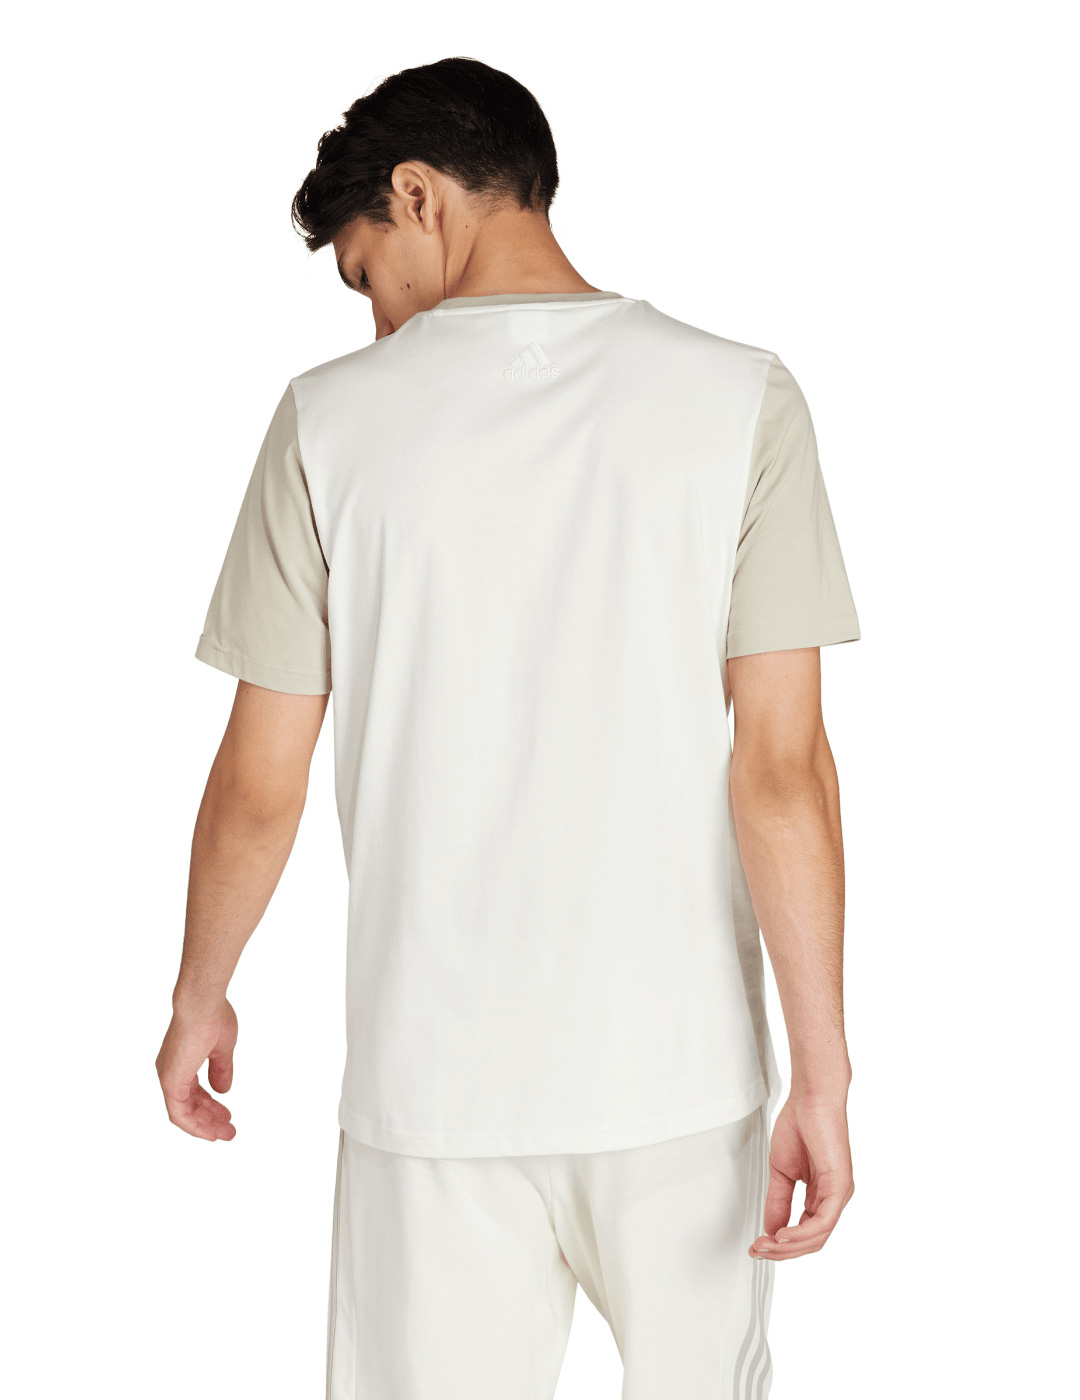 camiseta hombre adidas manga corta blanco/beige